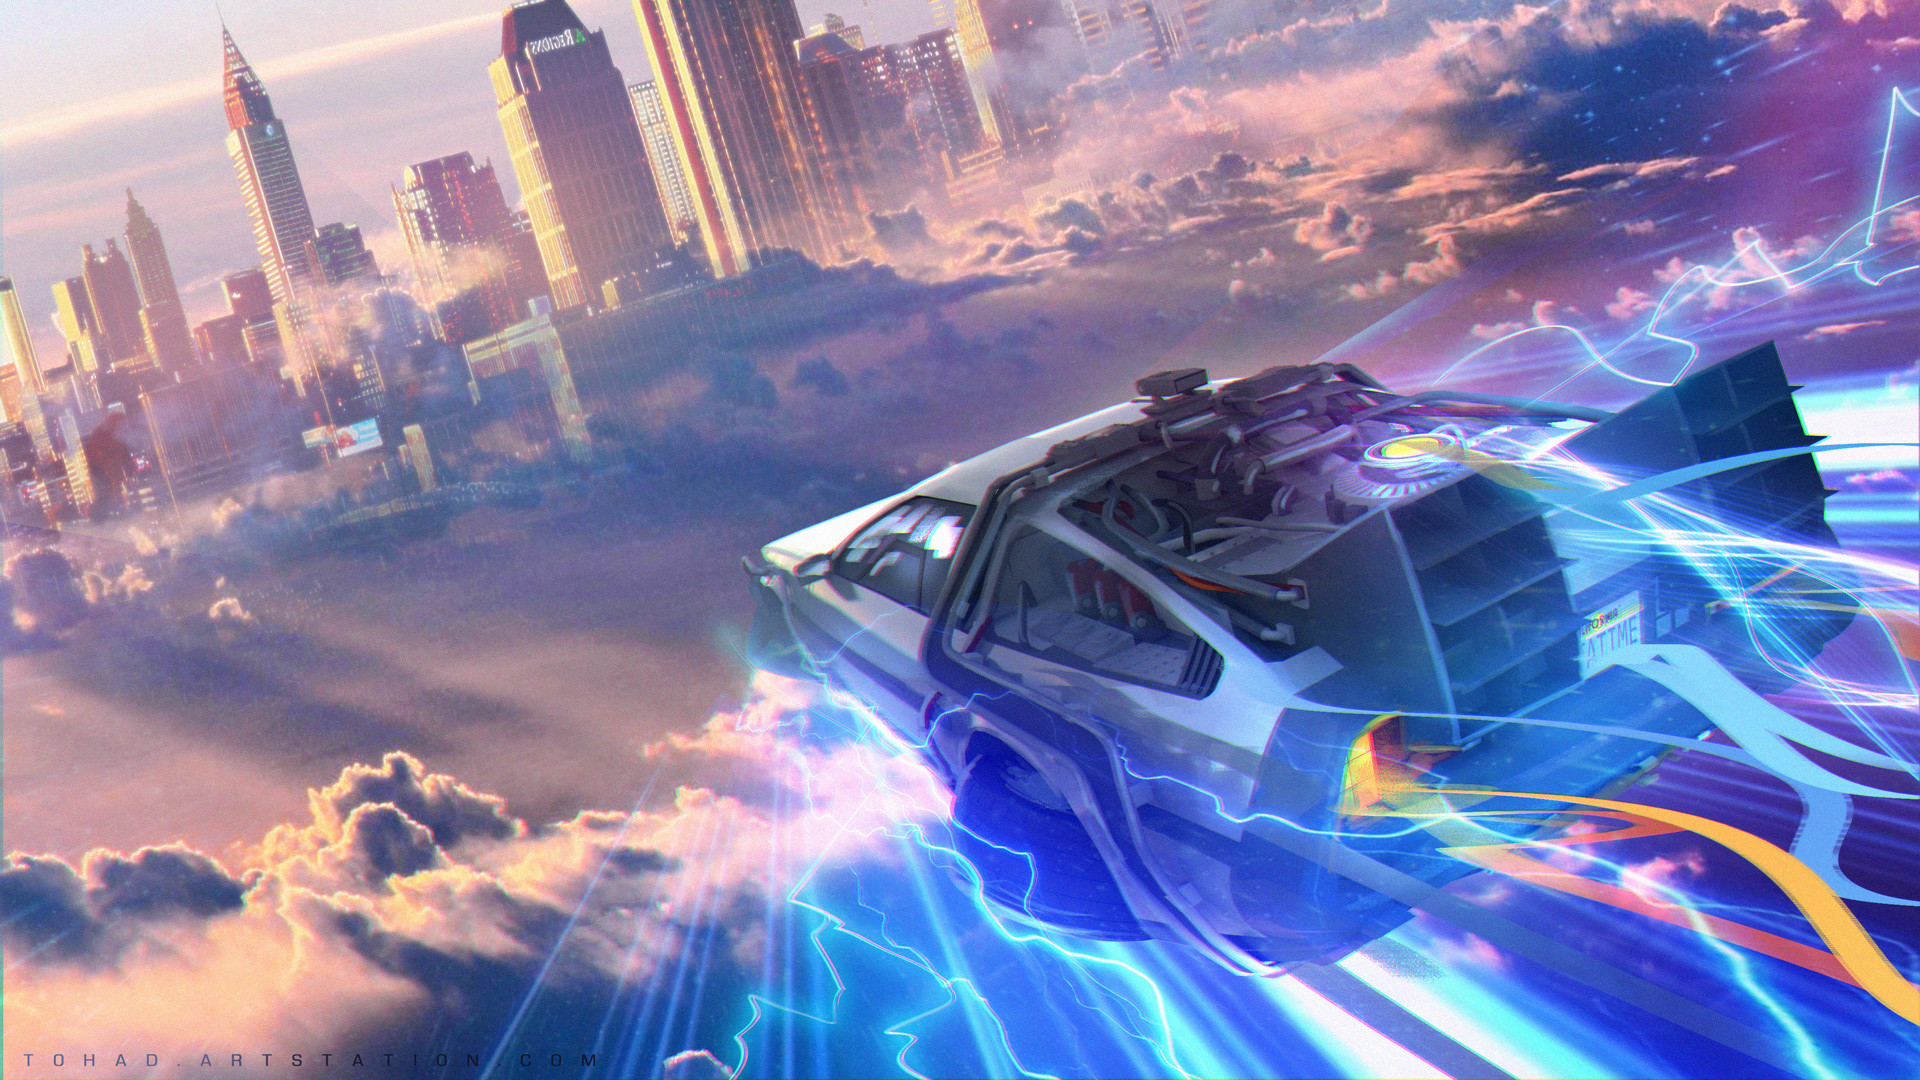 The Time Machine, Back to the Future, DMC DeLorean, Flying, Artwork, Cityscape, Science fiction Wallpaper